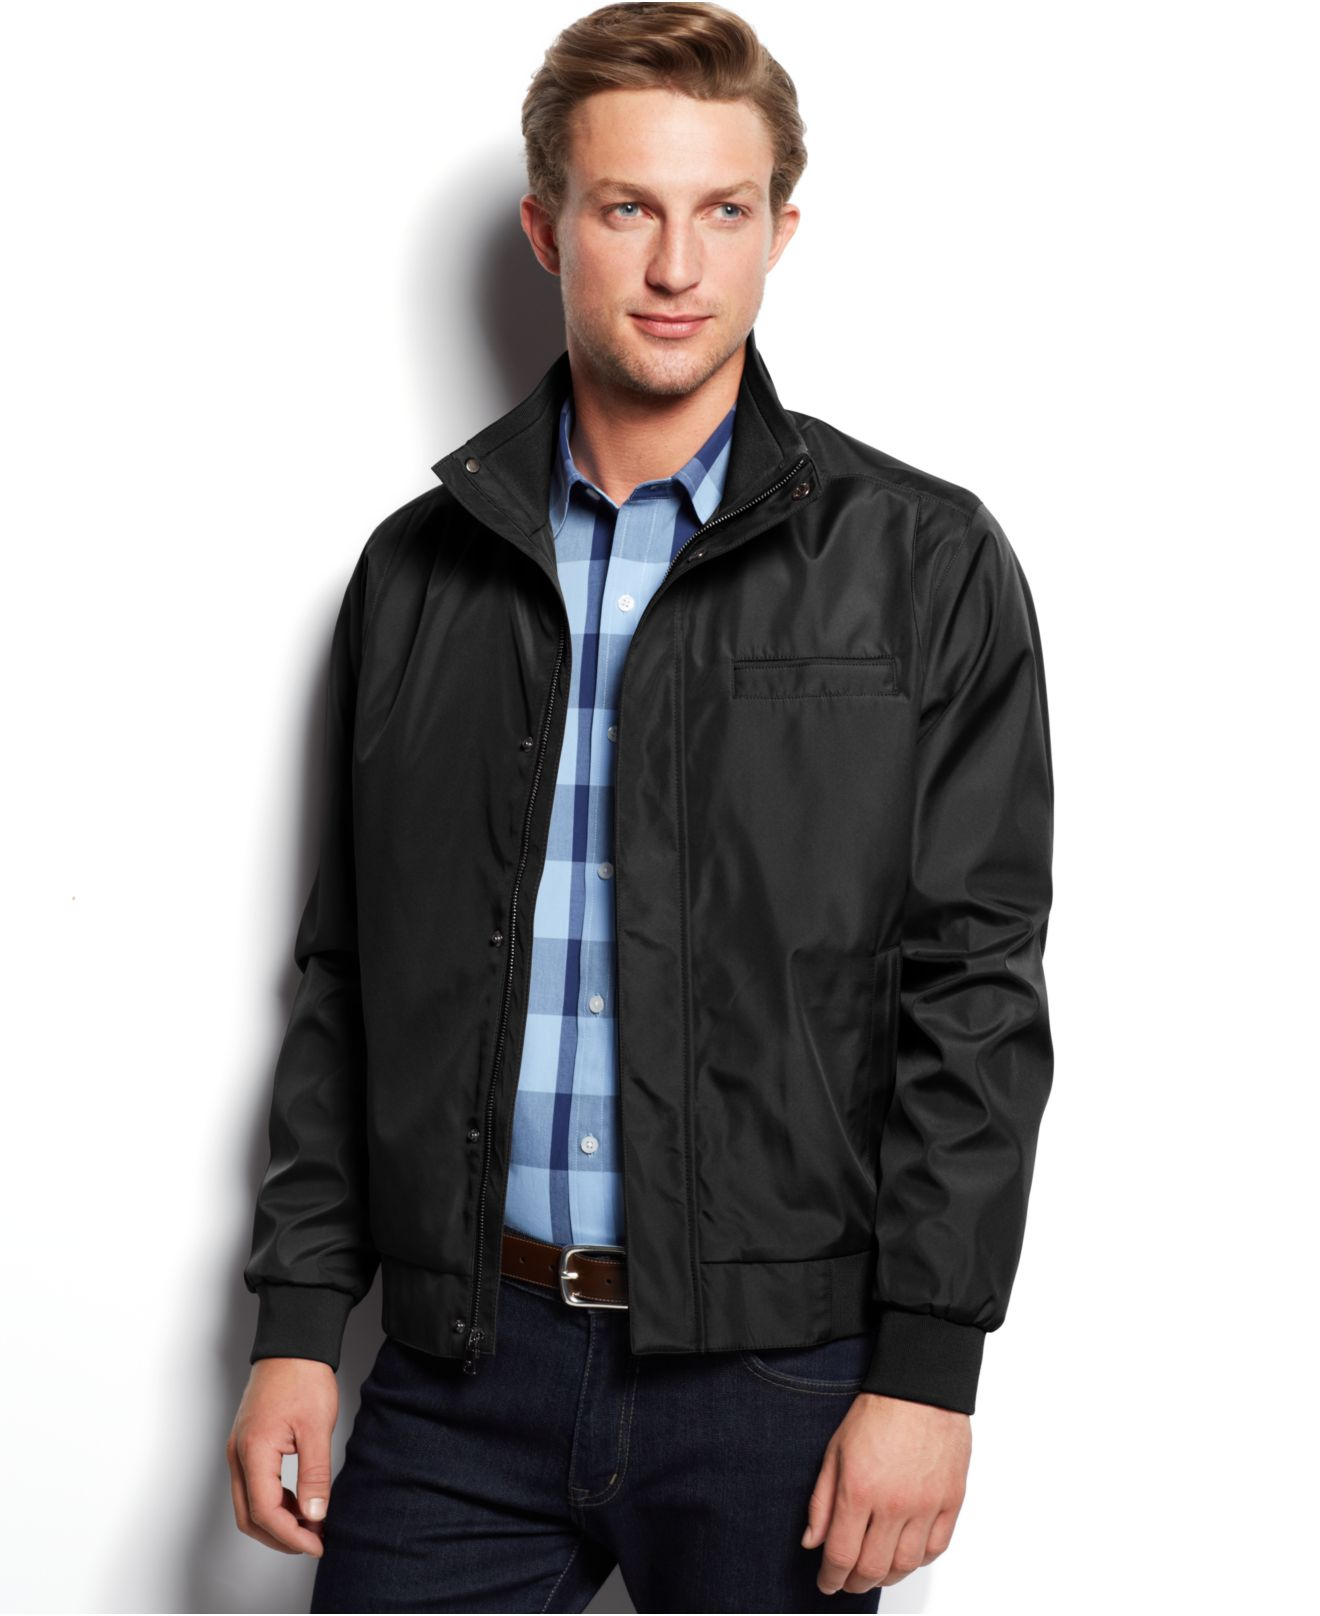 Lyst - Calvin Klein Weather-resistant Bomber Jacket in Black for Men